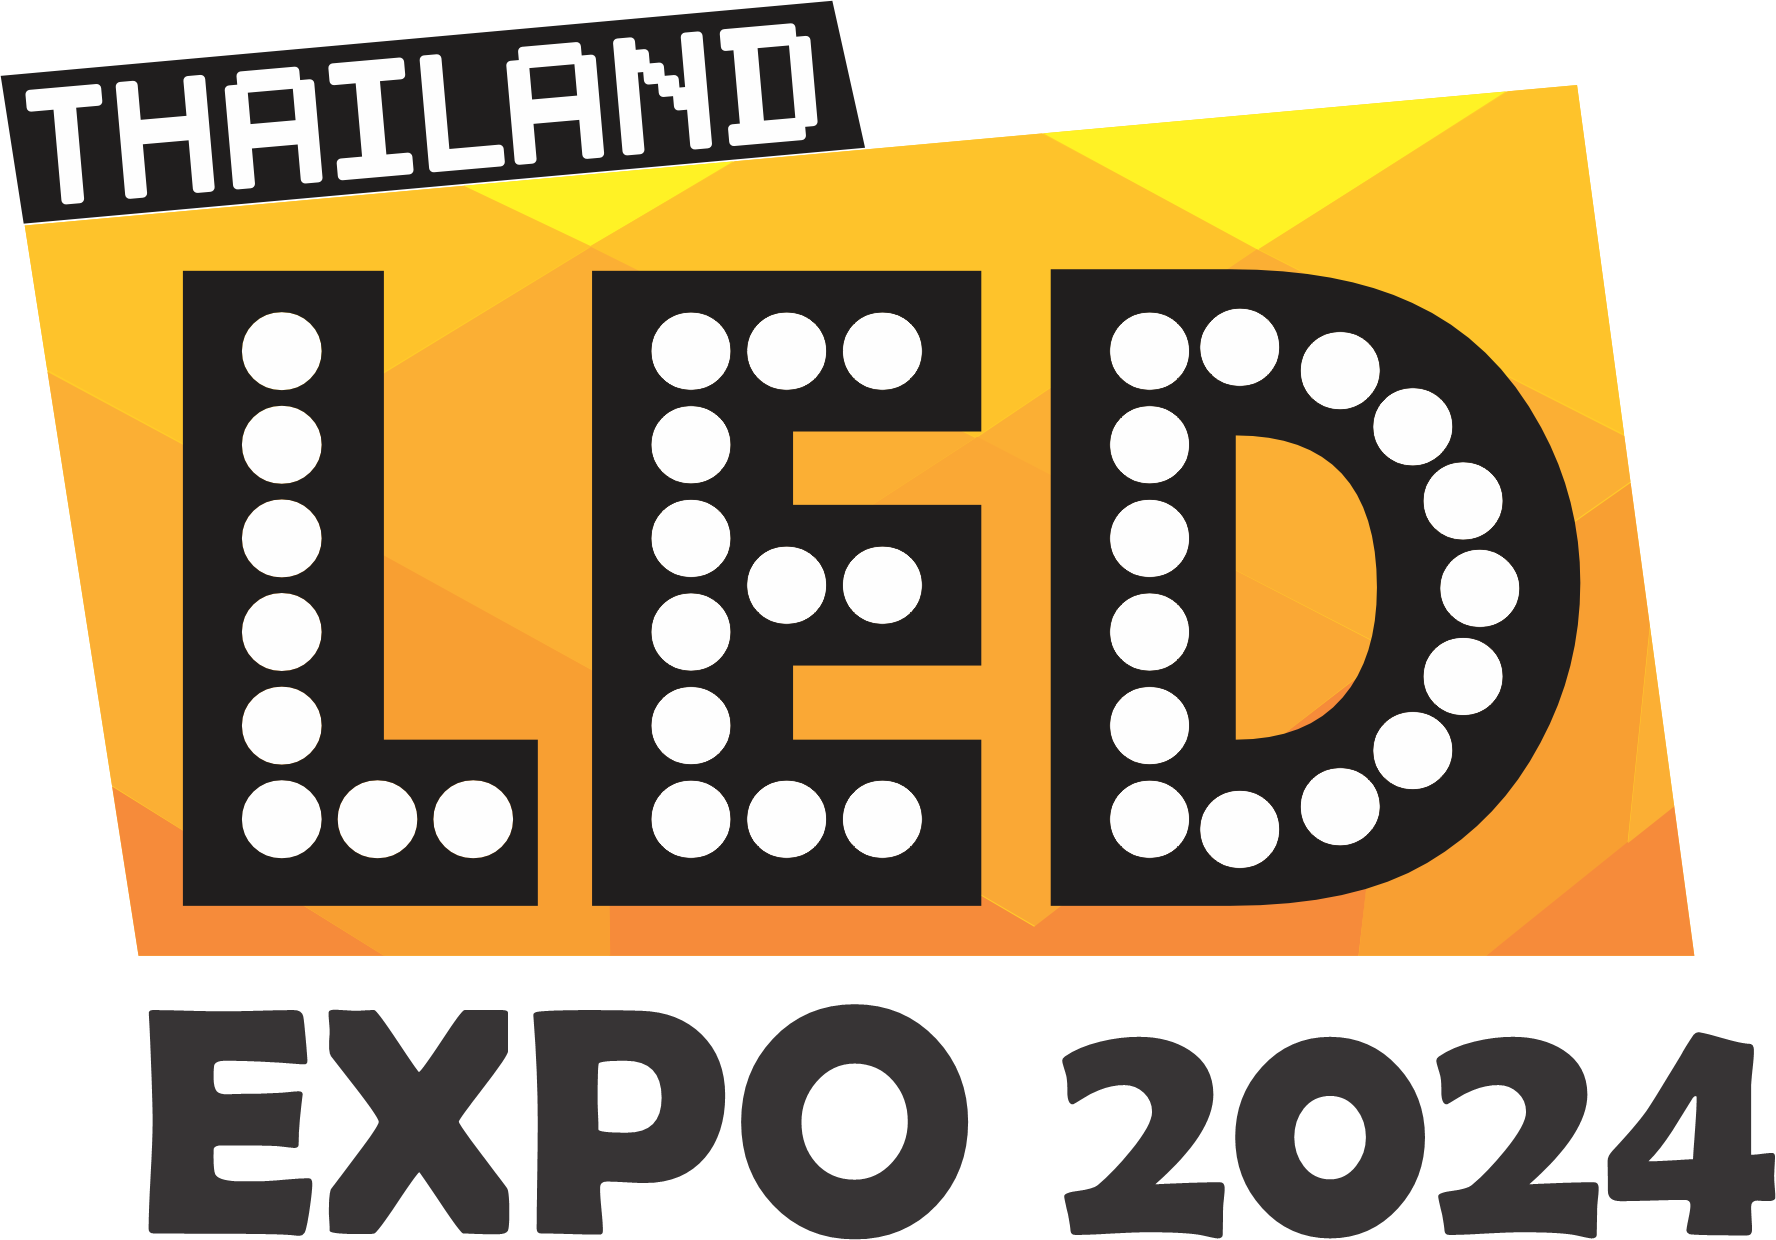 Led Expo Thailand